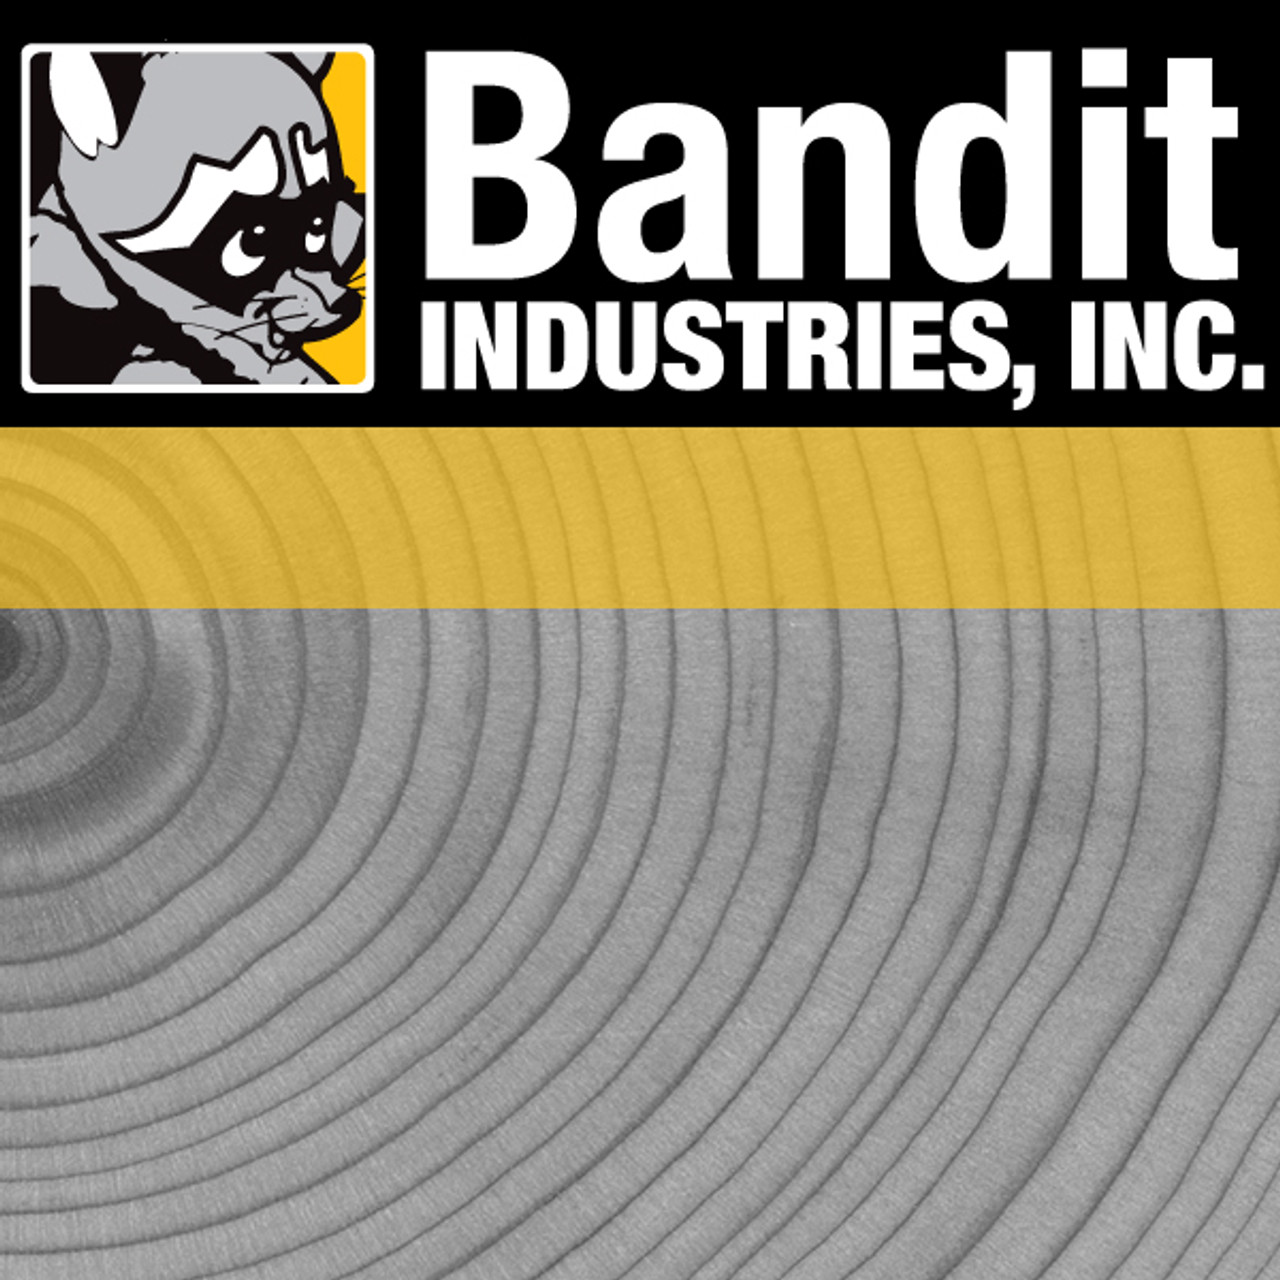 937-2003-21: BANDIT HEIGHT ADJ DISC CHUTE ASSY - 24"" LONGER